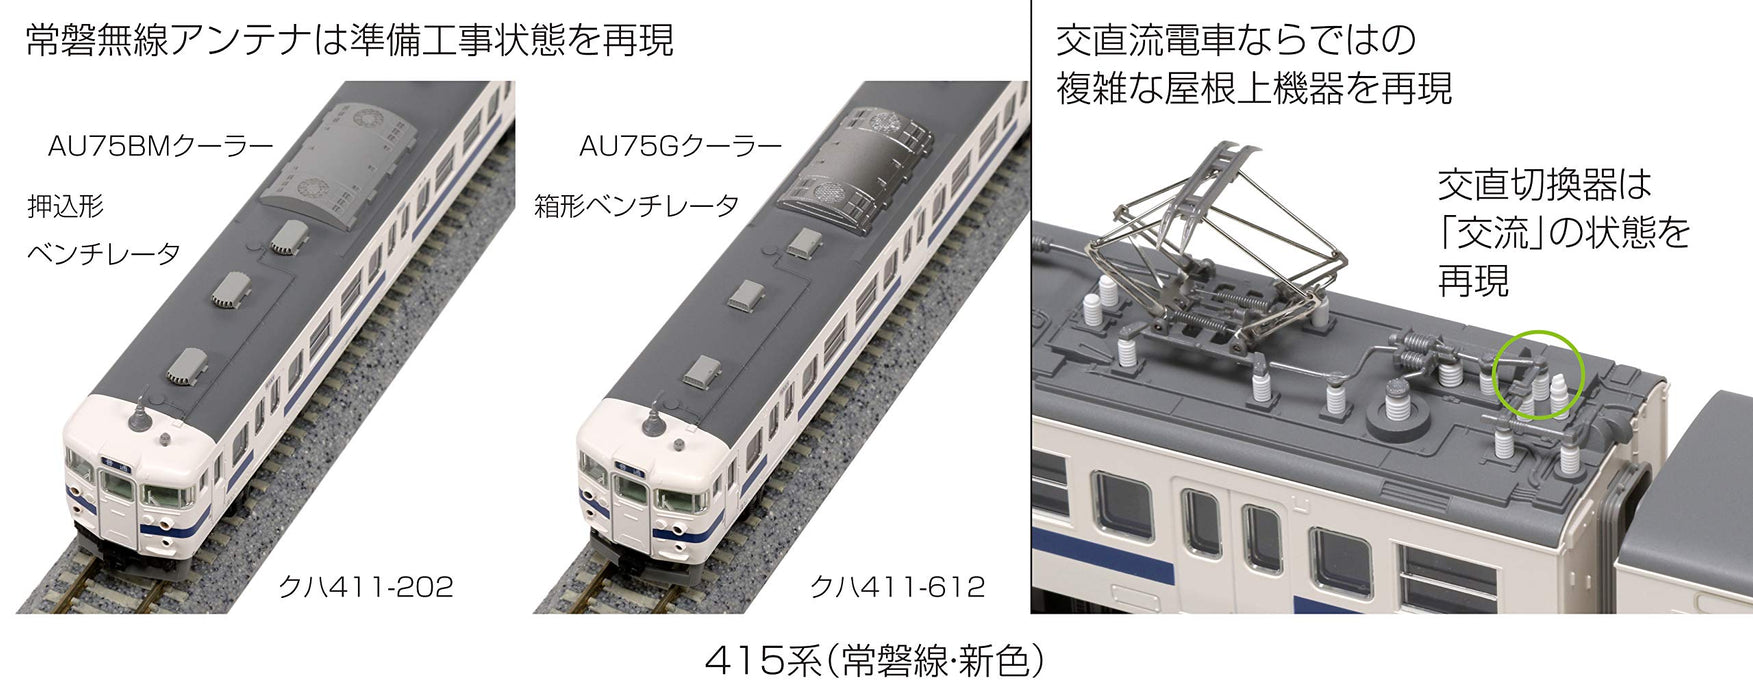 Kato N Gauge 415 Series Railway Model Train - Joban Line New Color 7-Car Set